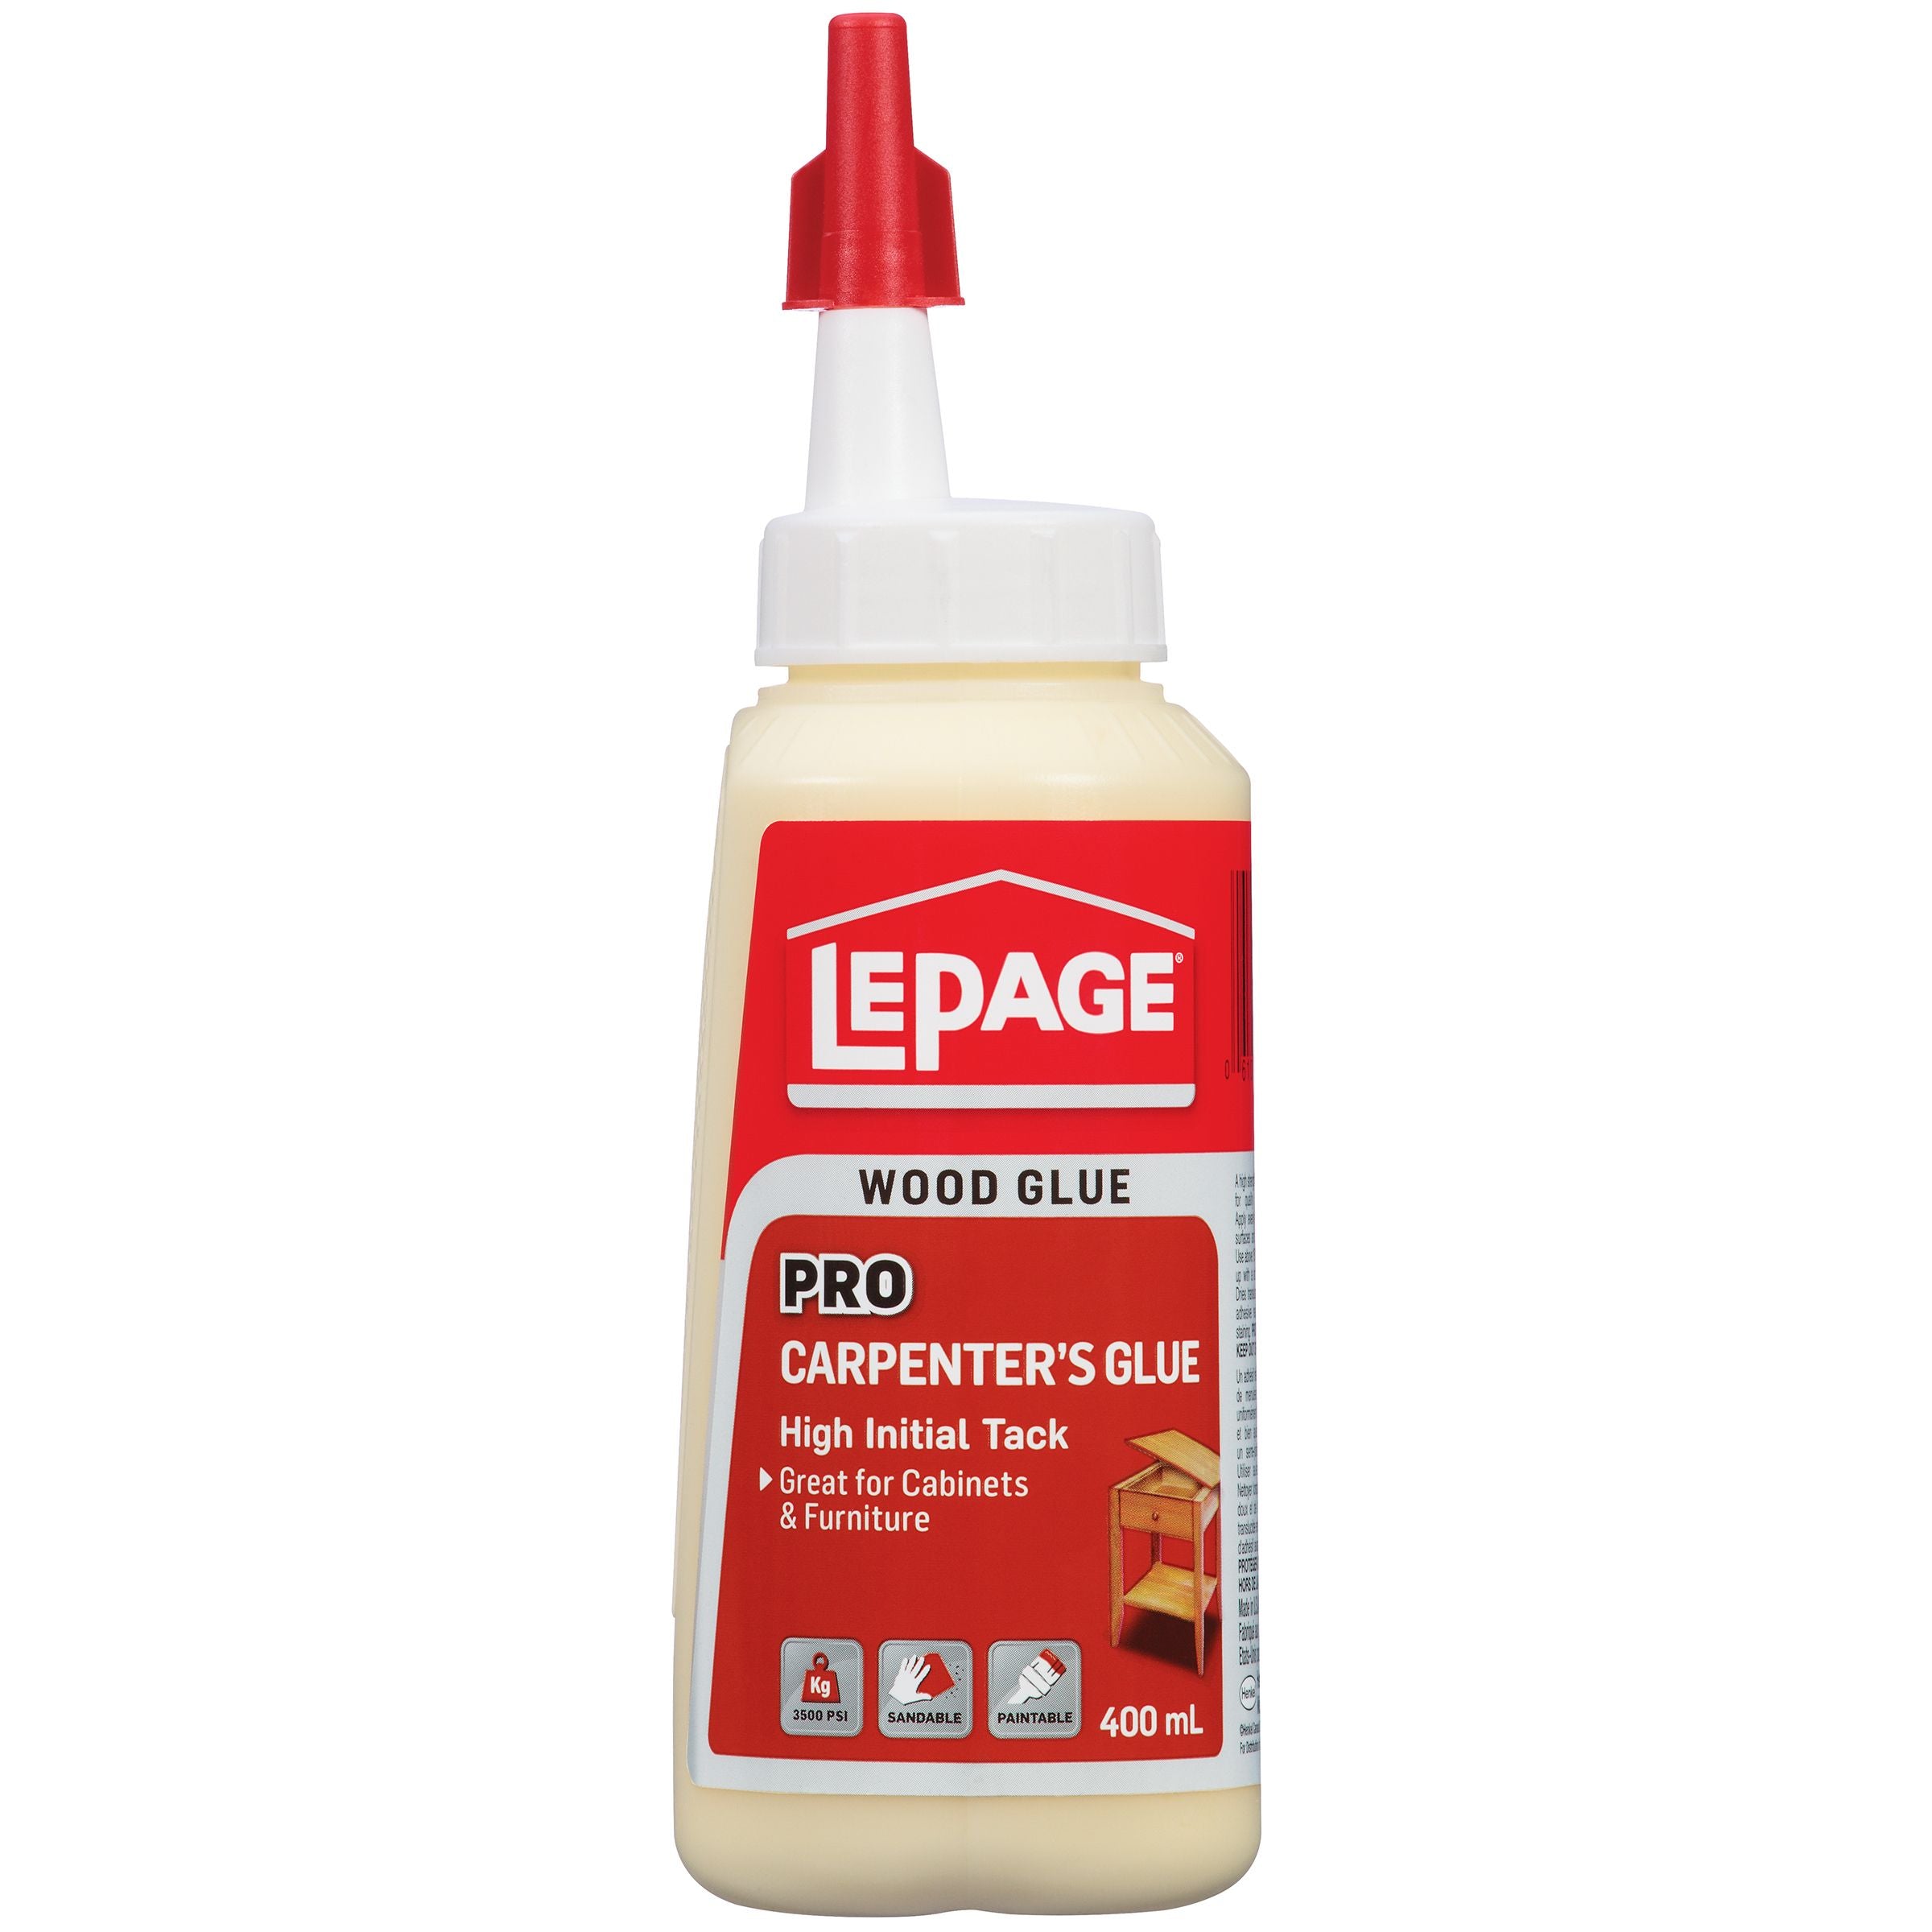 LePage Pro Carpenter’s Glue, Translucent Pale Yellow, 400 ml Bottle, Pack of 1